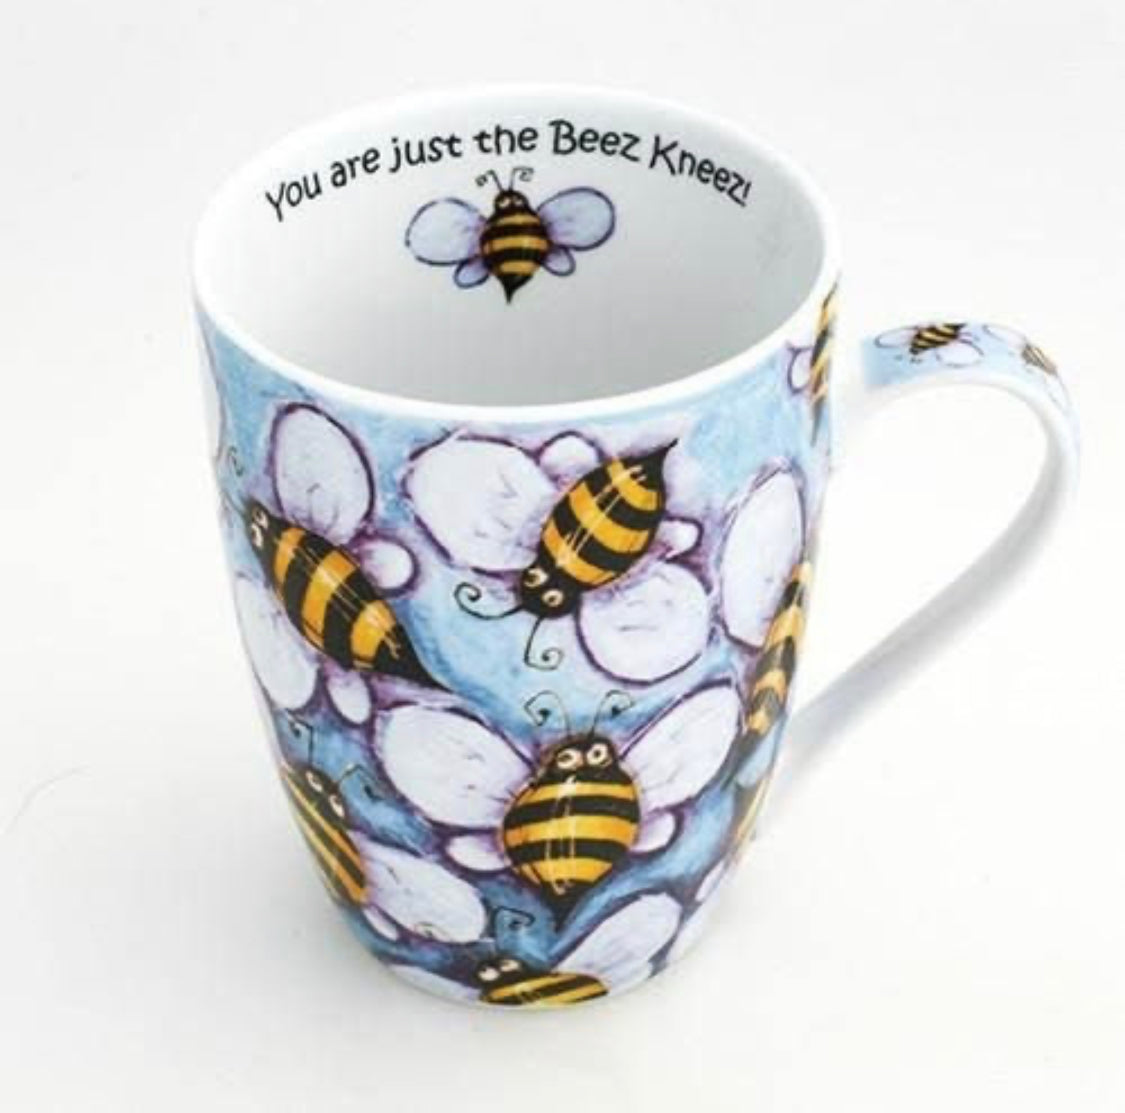 Cute Quality Bee Mug - Pure & Natural Honey Co